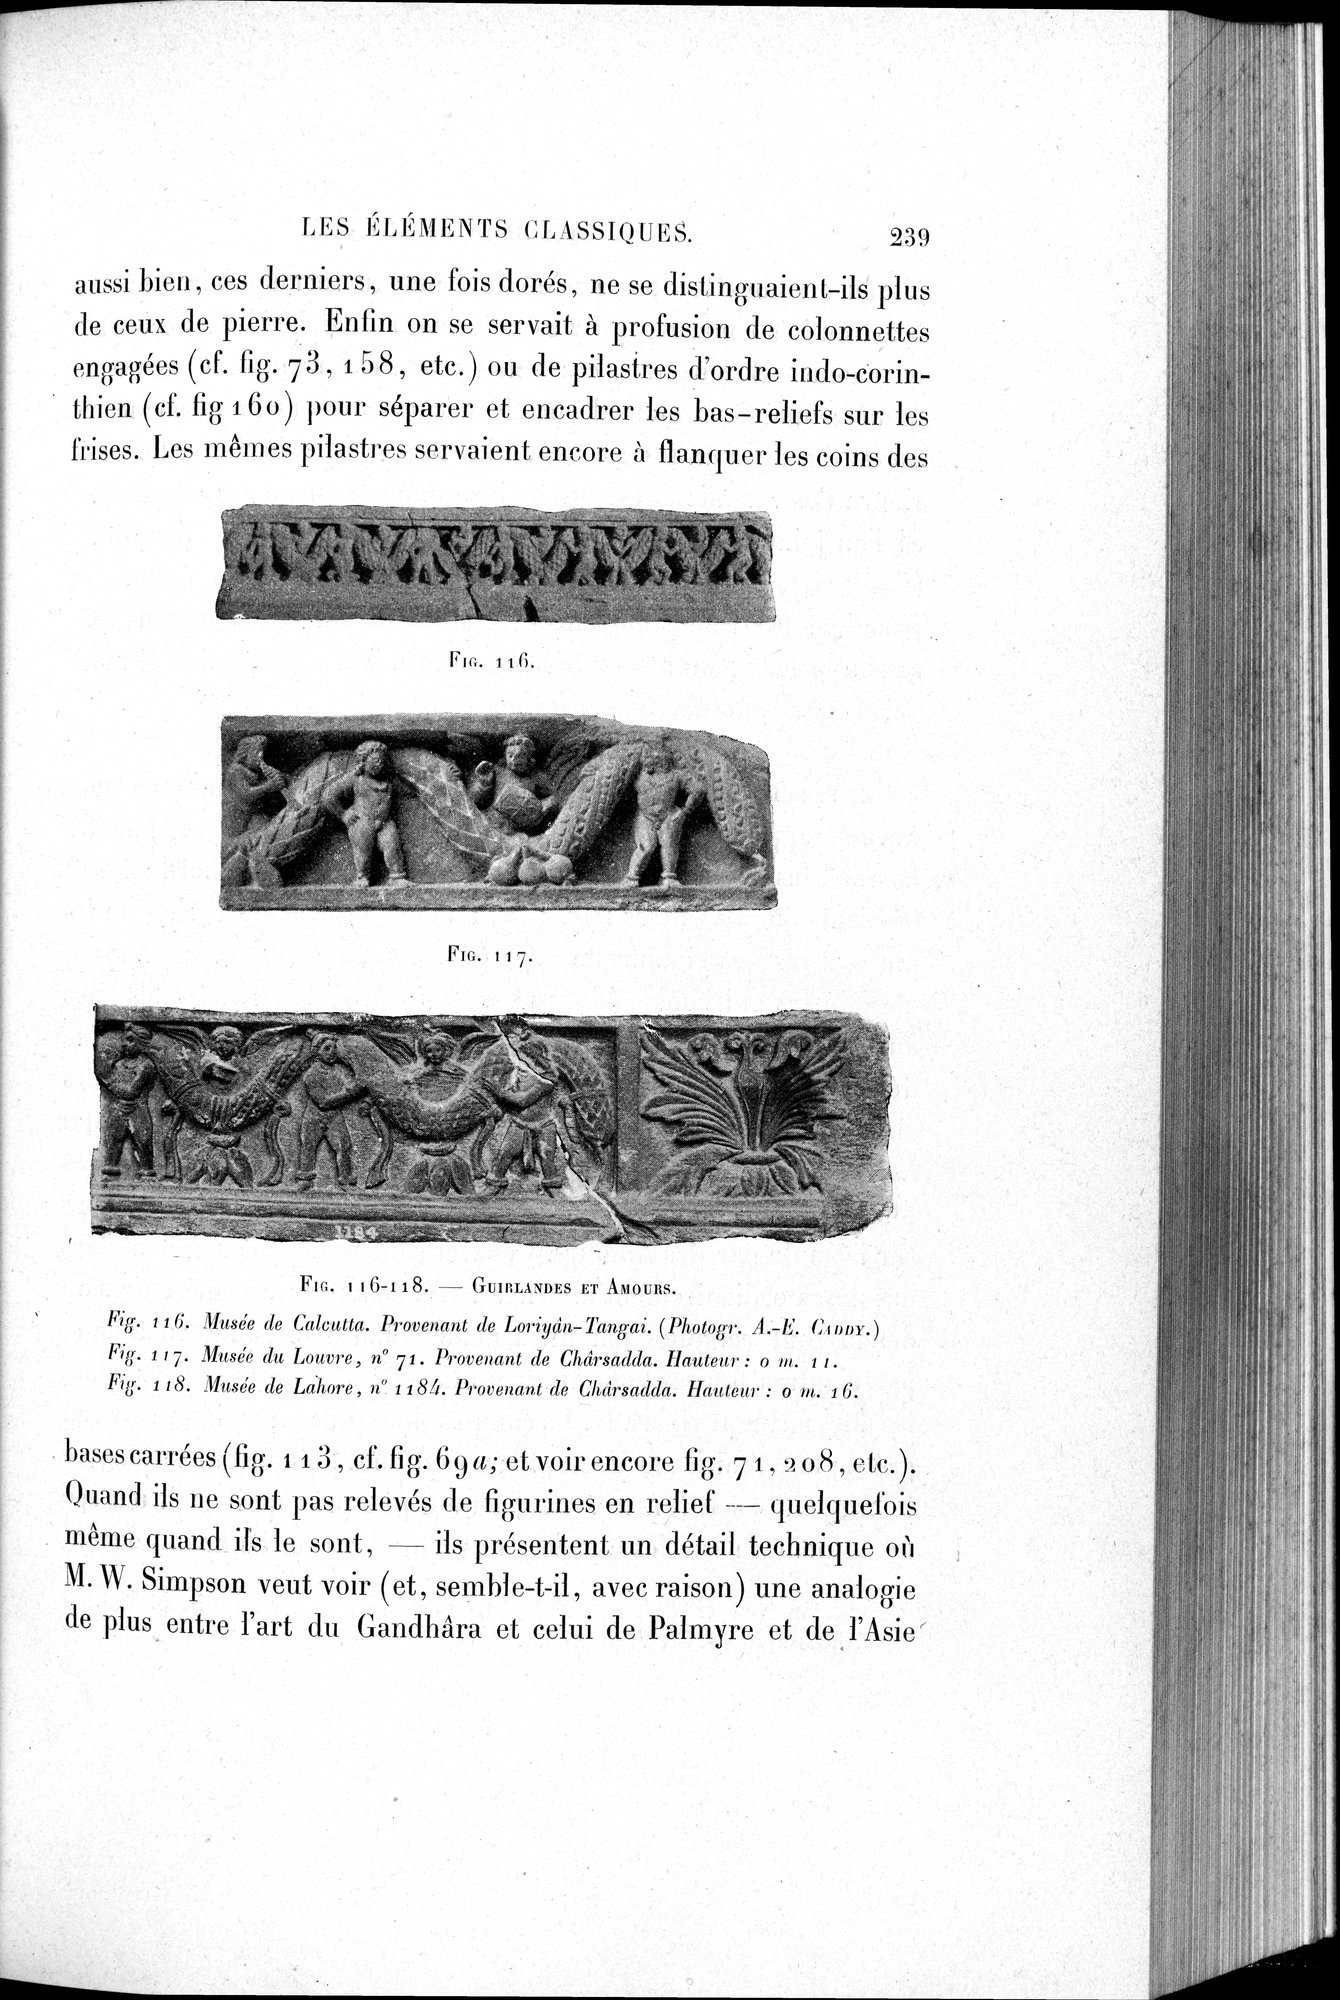 L'art Greco-Bouddhique du Gandhâra : vol.1 / Page 265 (Grayscale High Resolution Image)